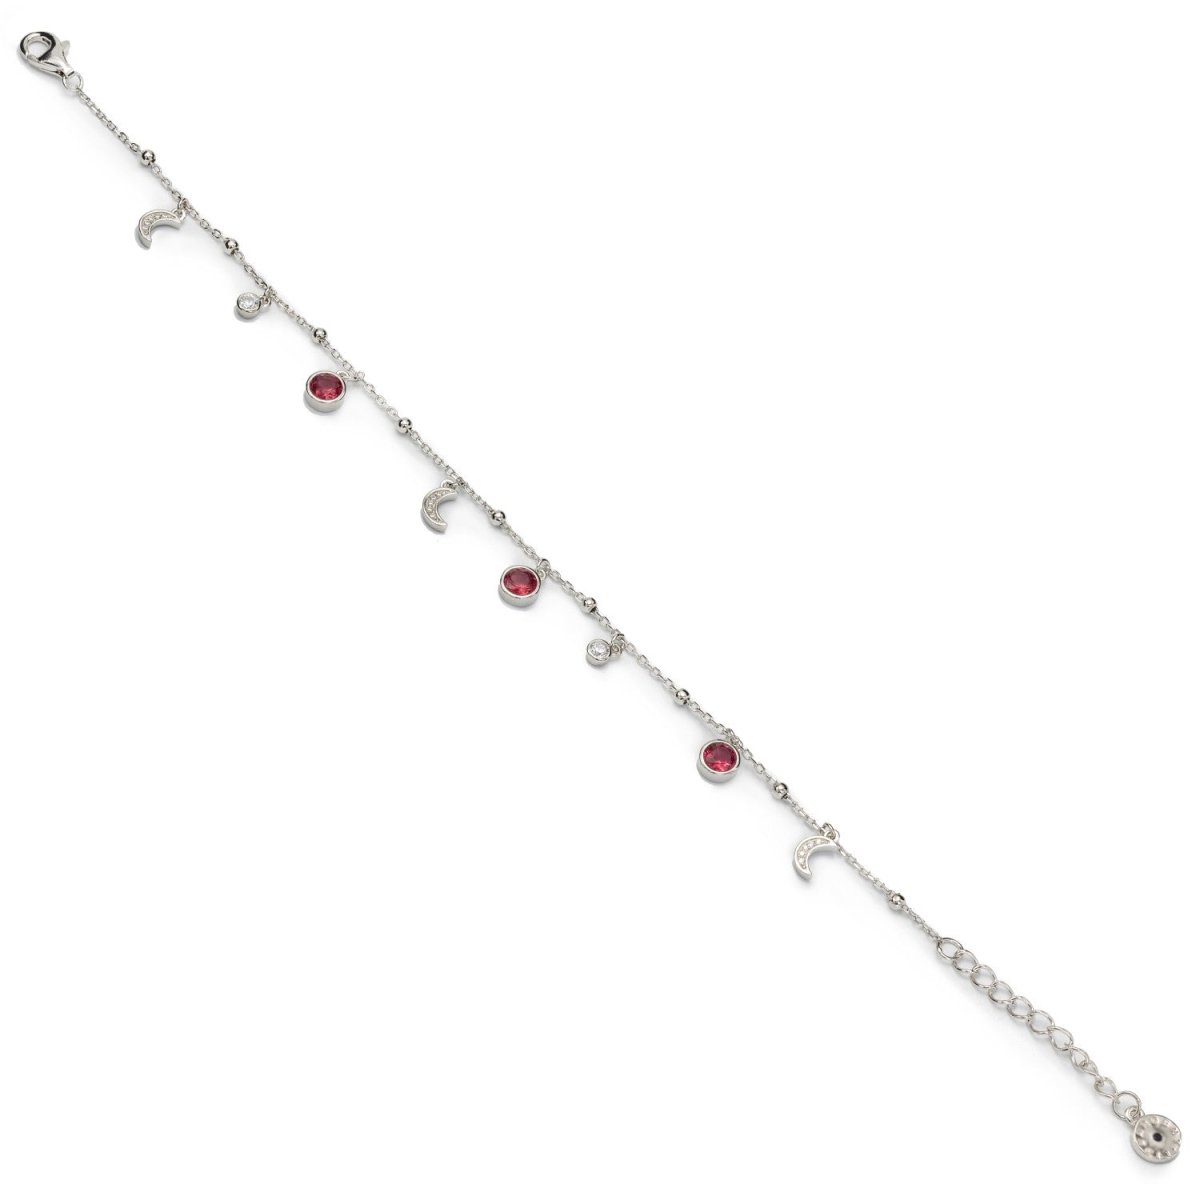 Bracelet - Bracelets with pendants with moon motif stones